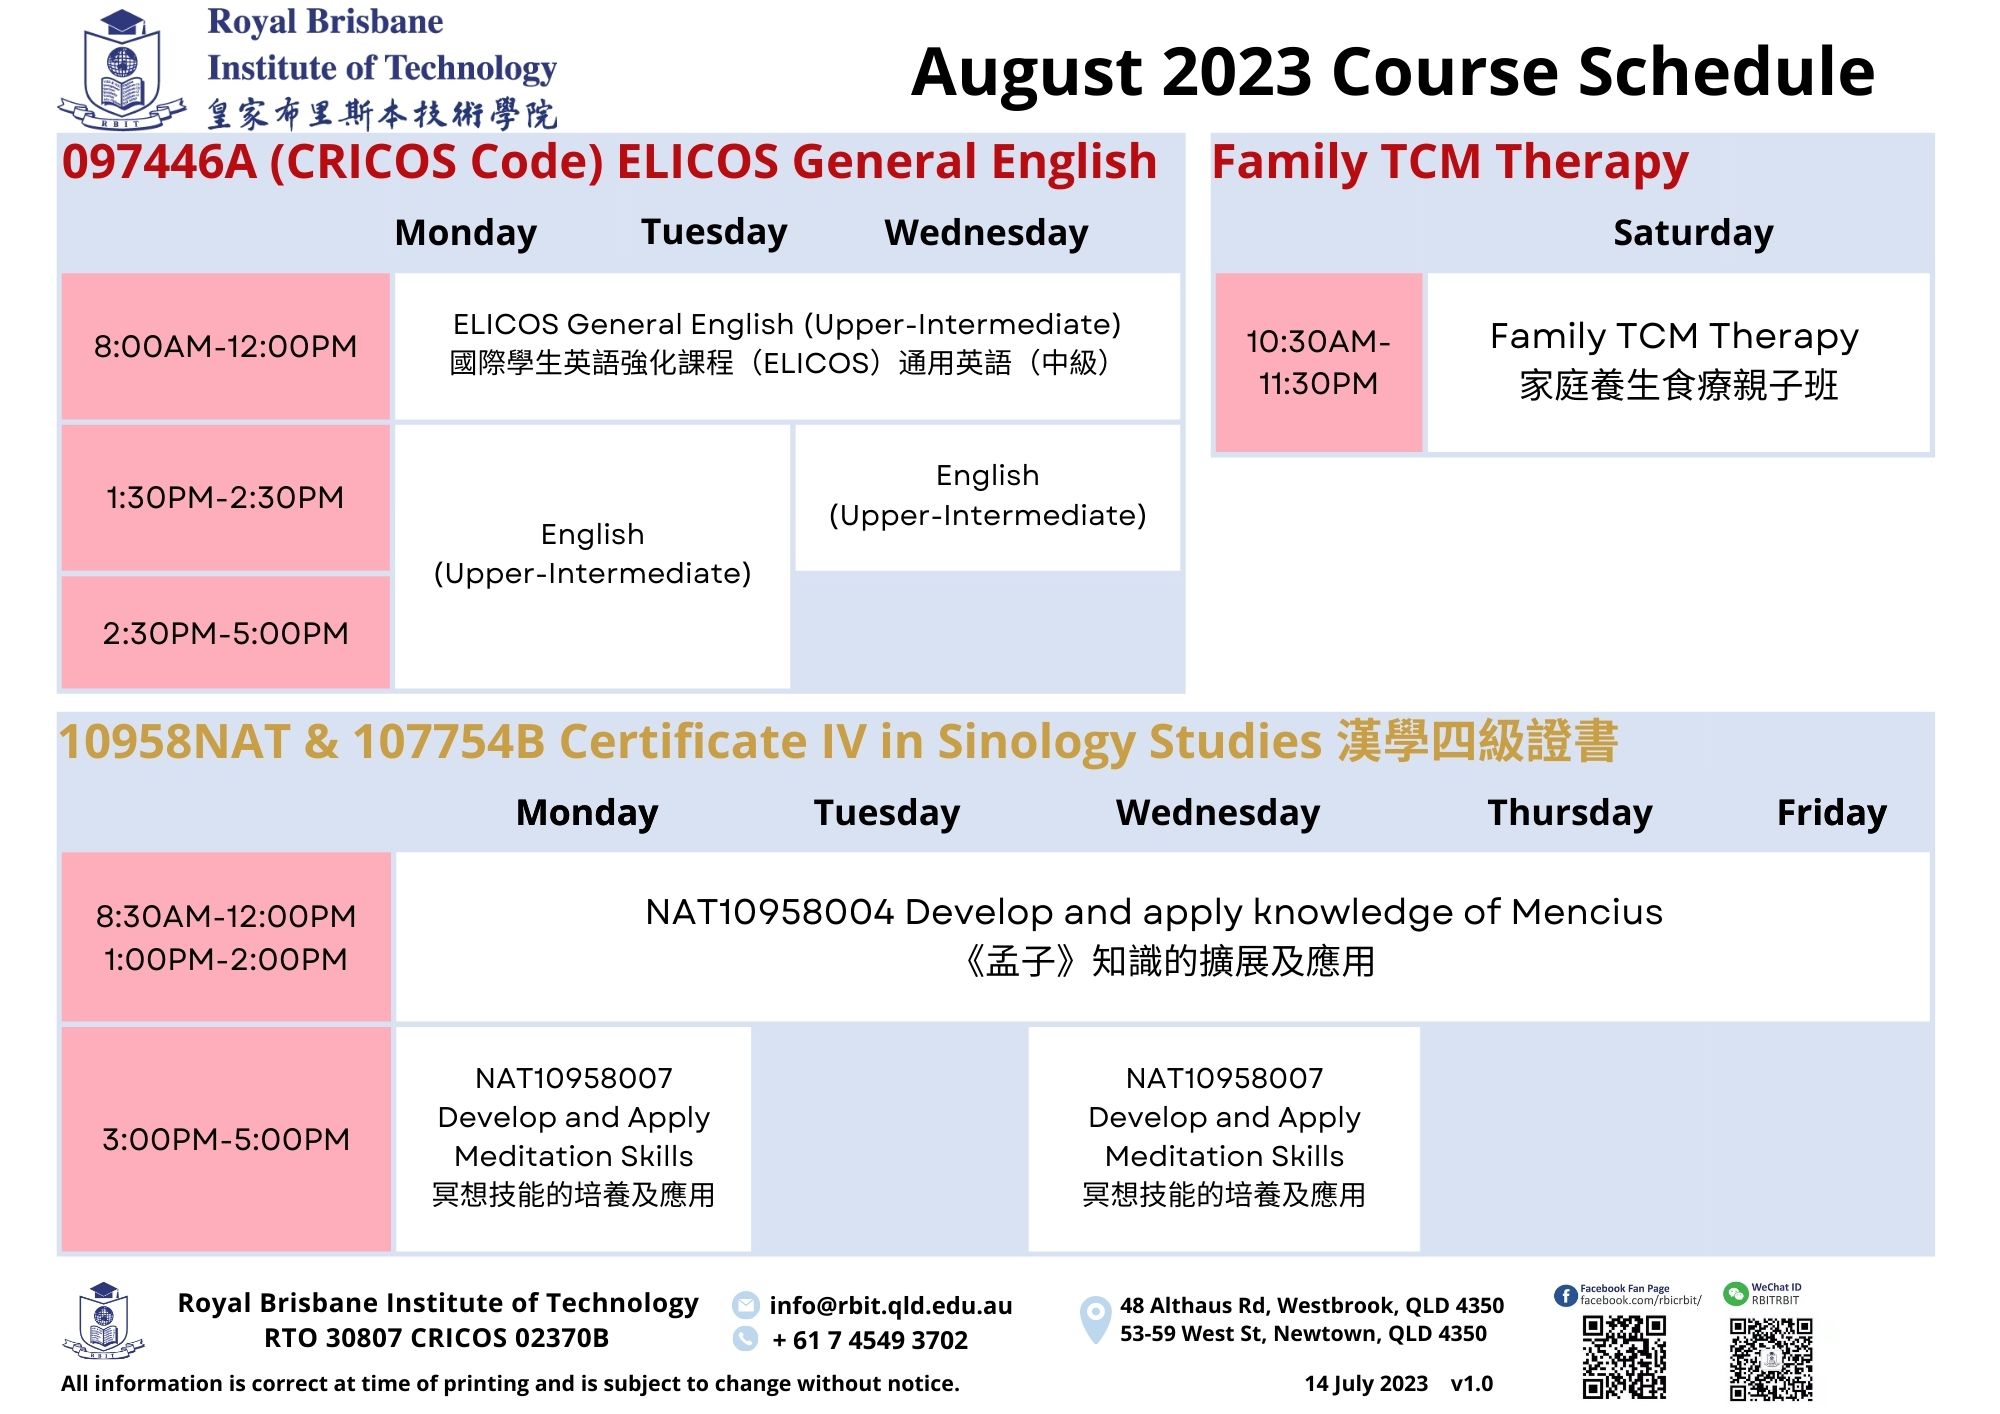 AL0_August 2023 Course Schedule_v1.0